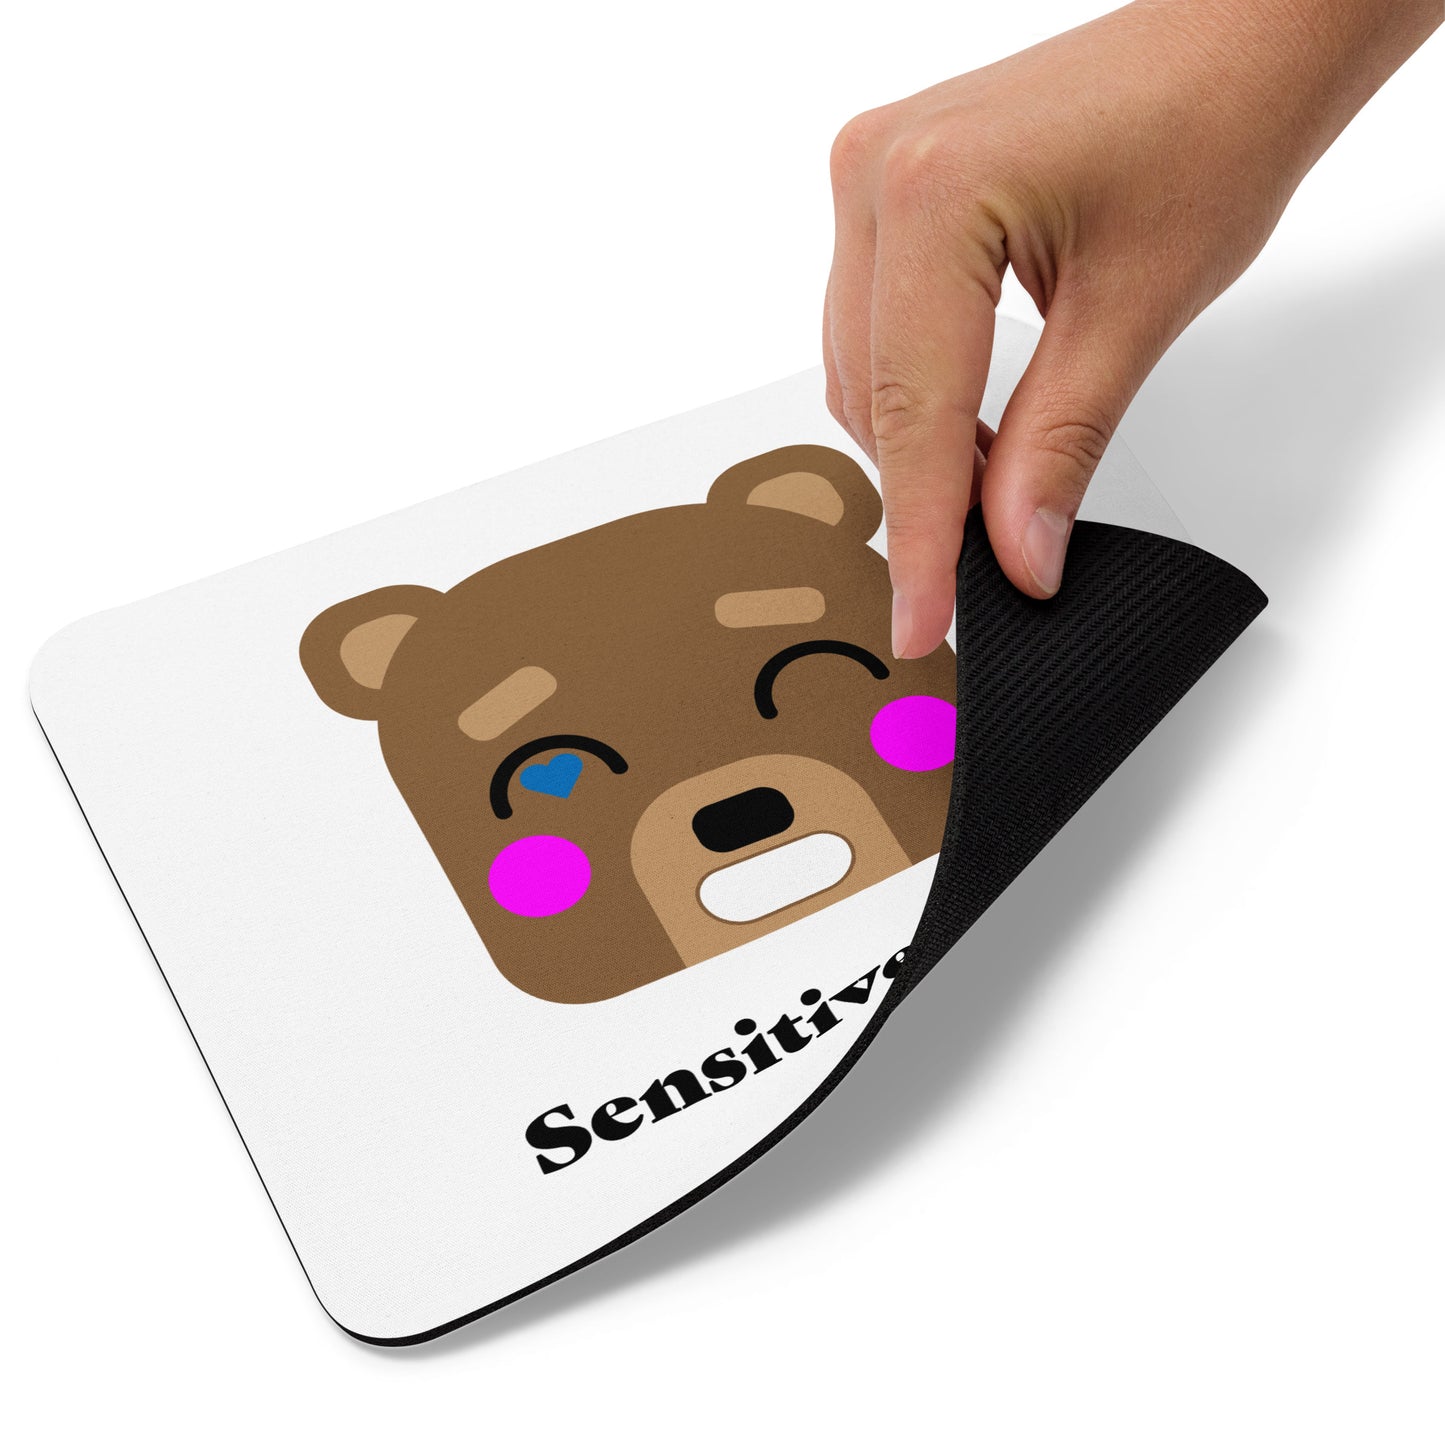 Sensitive Bear Mouse pad